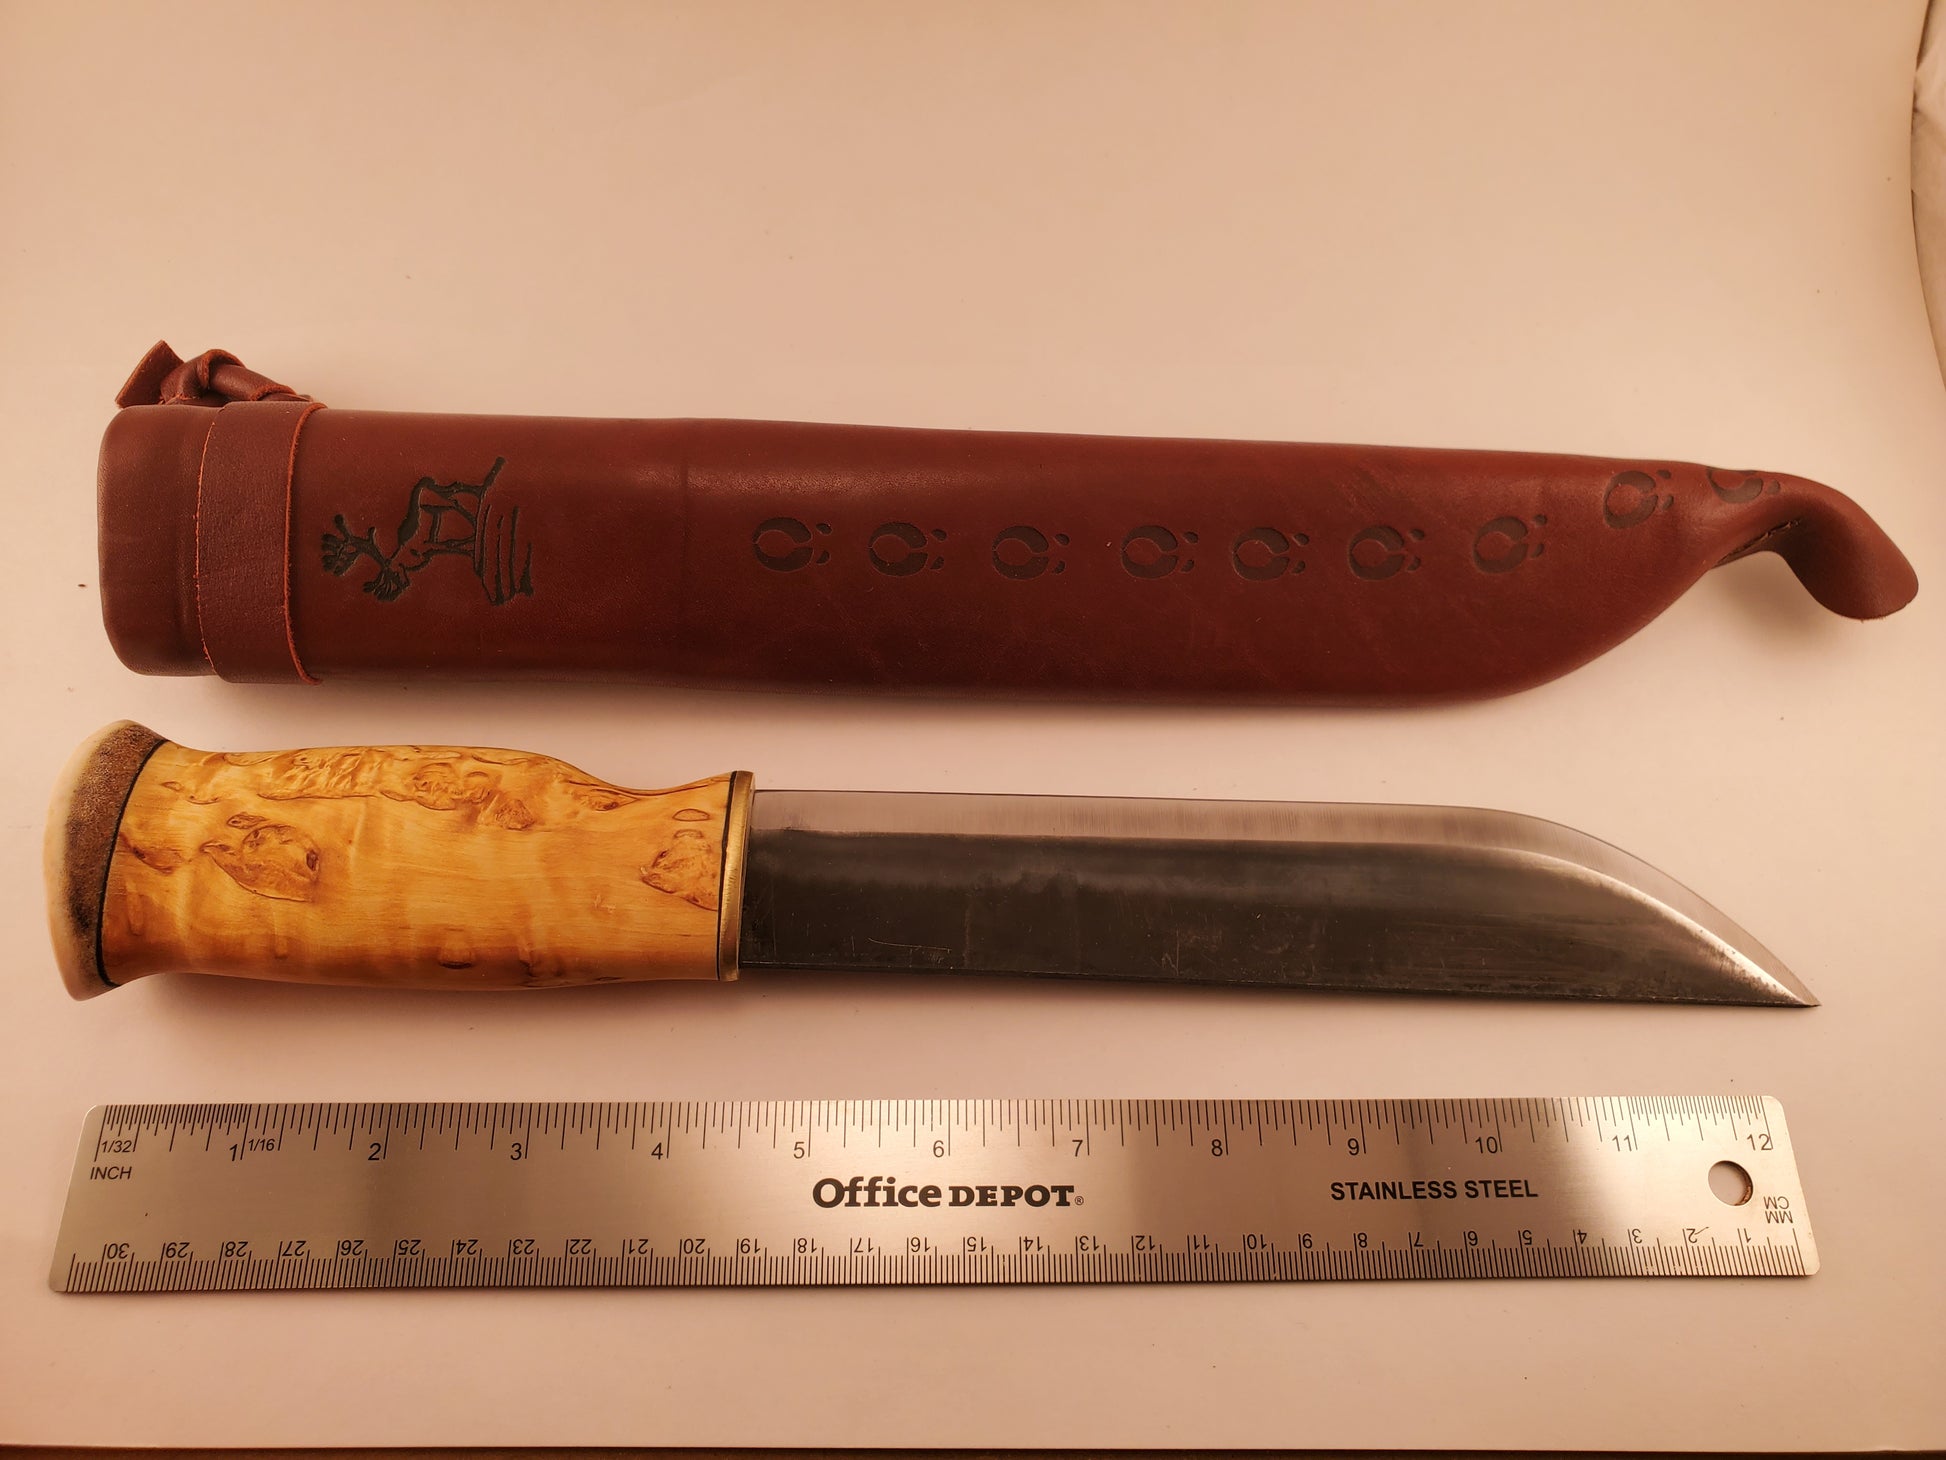 Wood Jewel Leuku Bushcraft Outdoor Puukko Knife